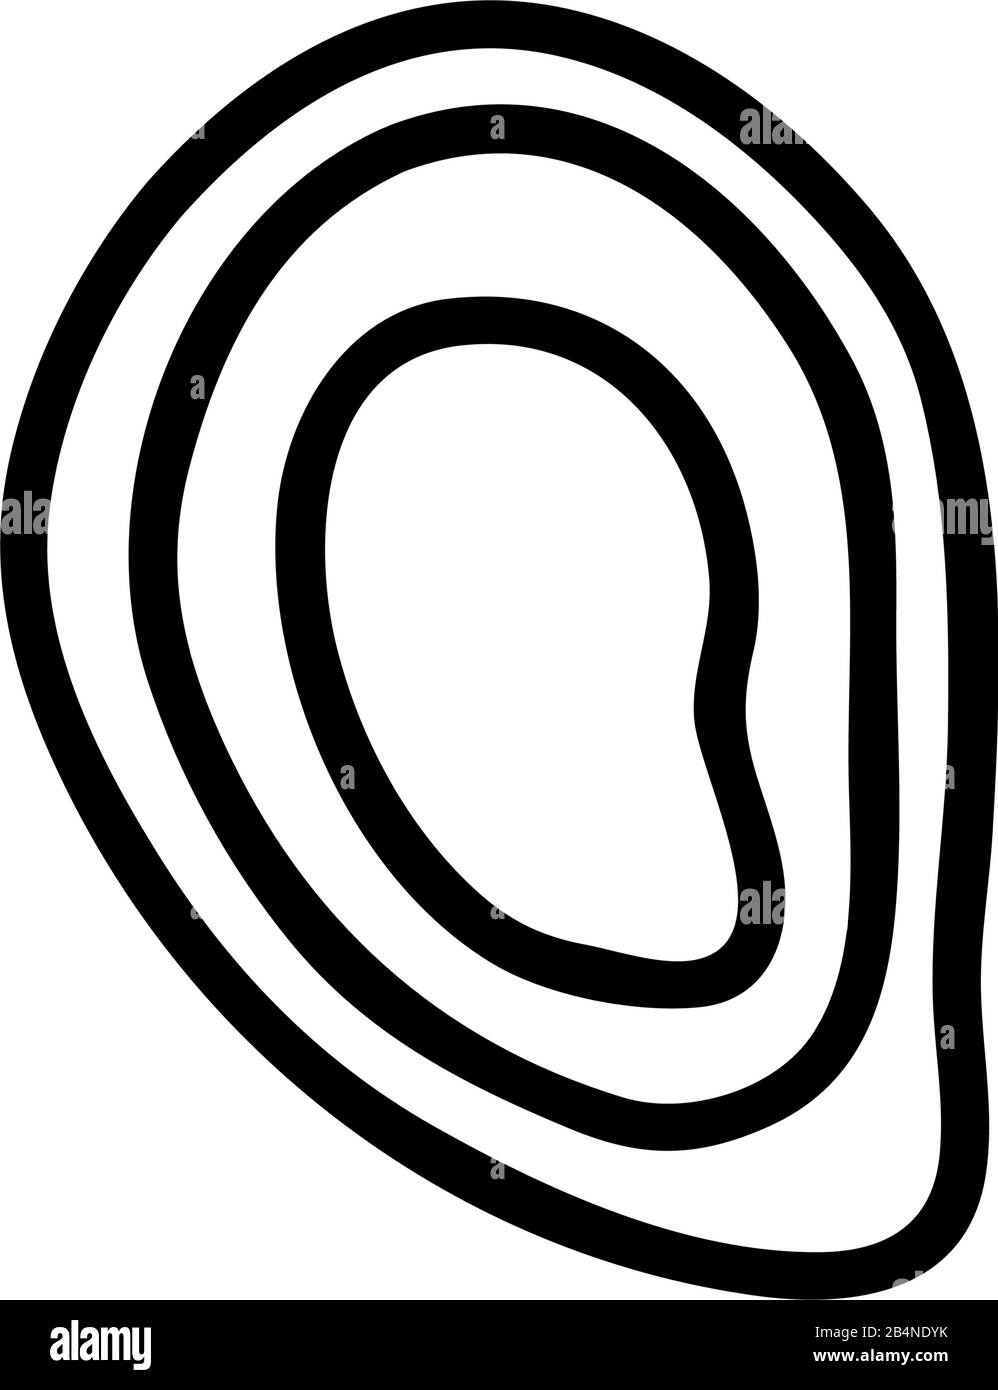 vecteur d'icône seashell. Illustration du symbole de contour isolé Illustration de Vecteur